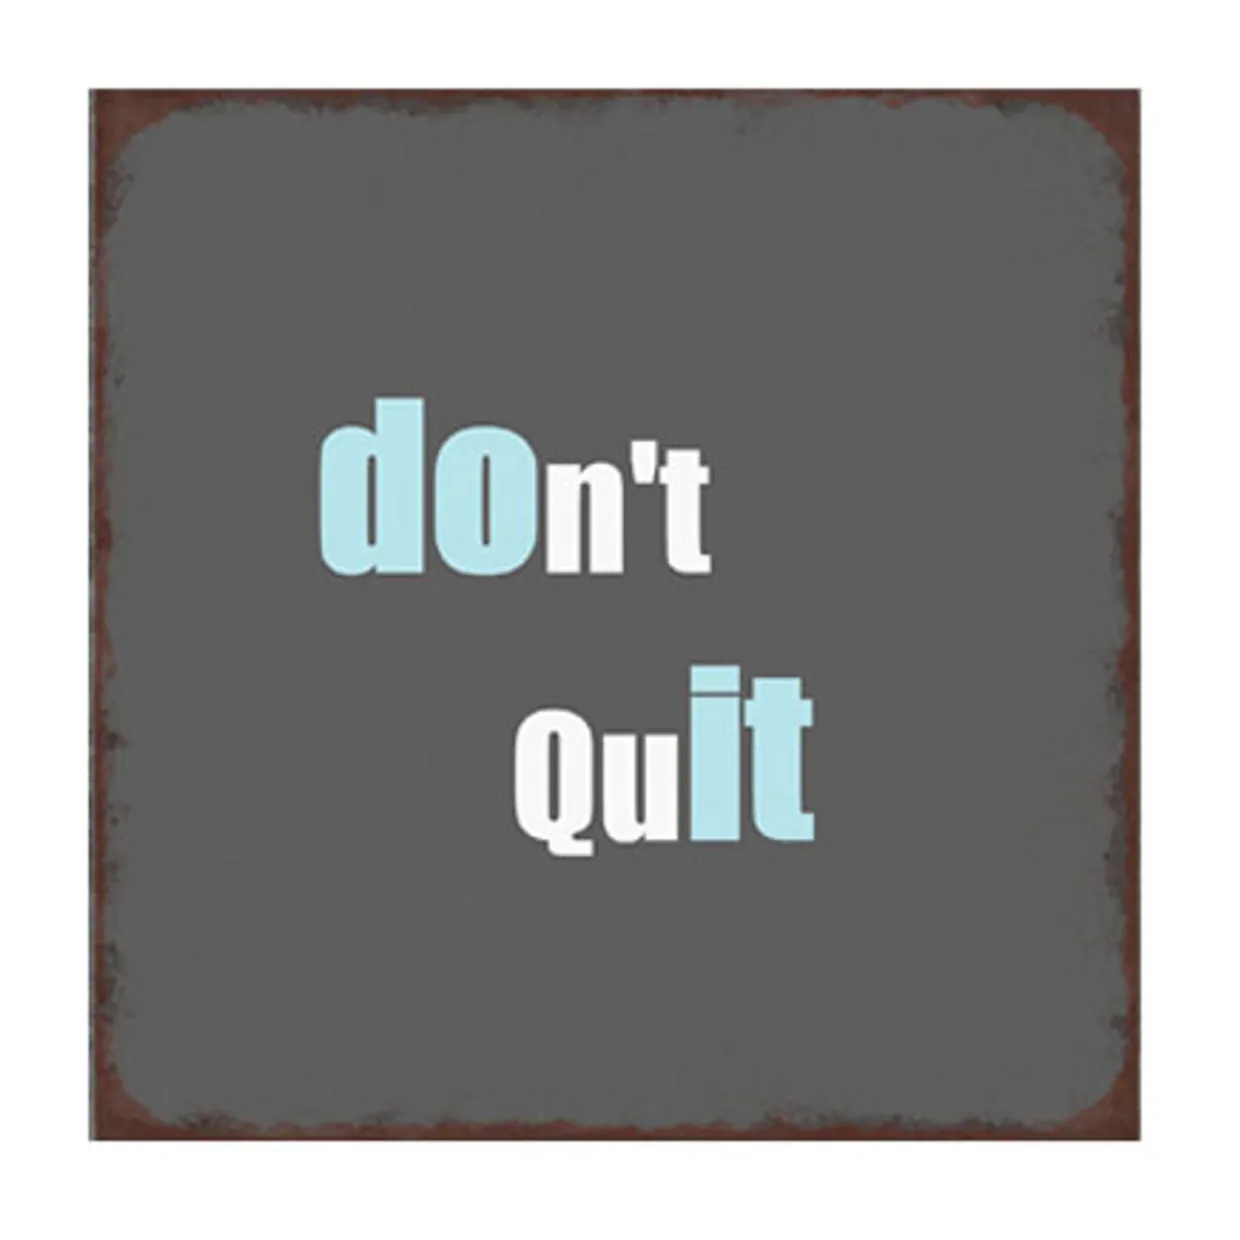 Tekstbord: "Don't quit"